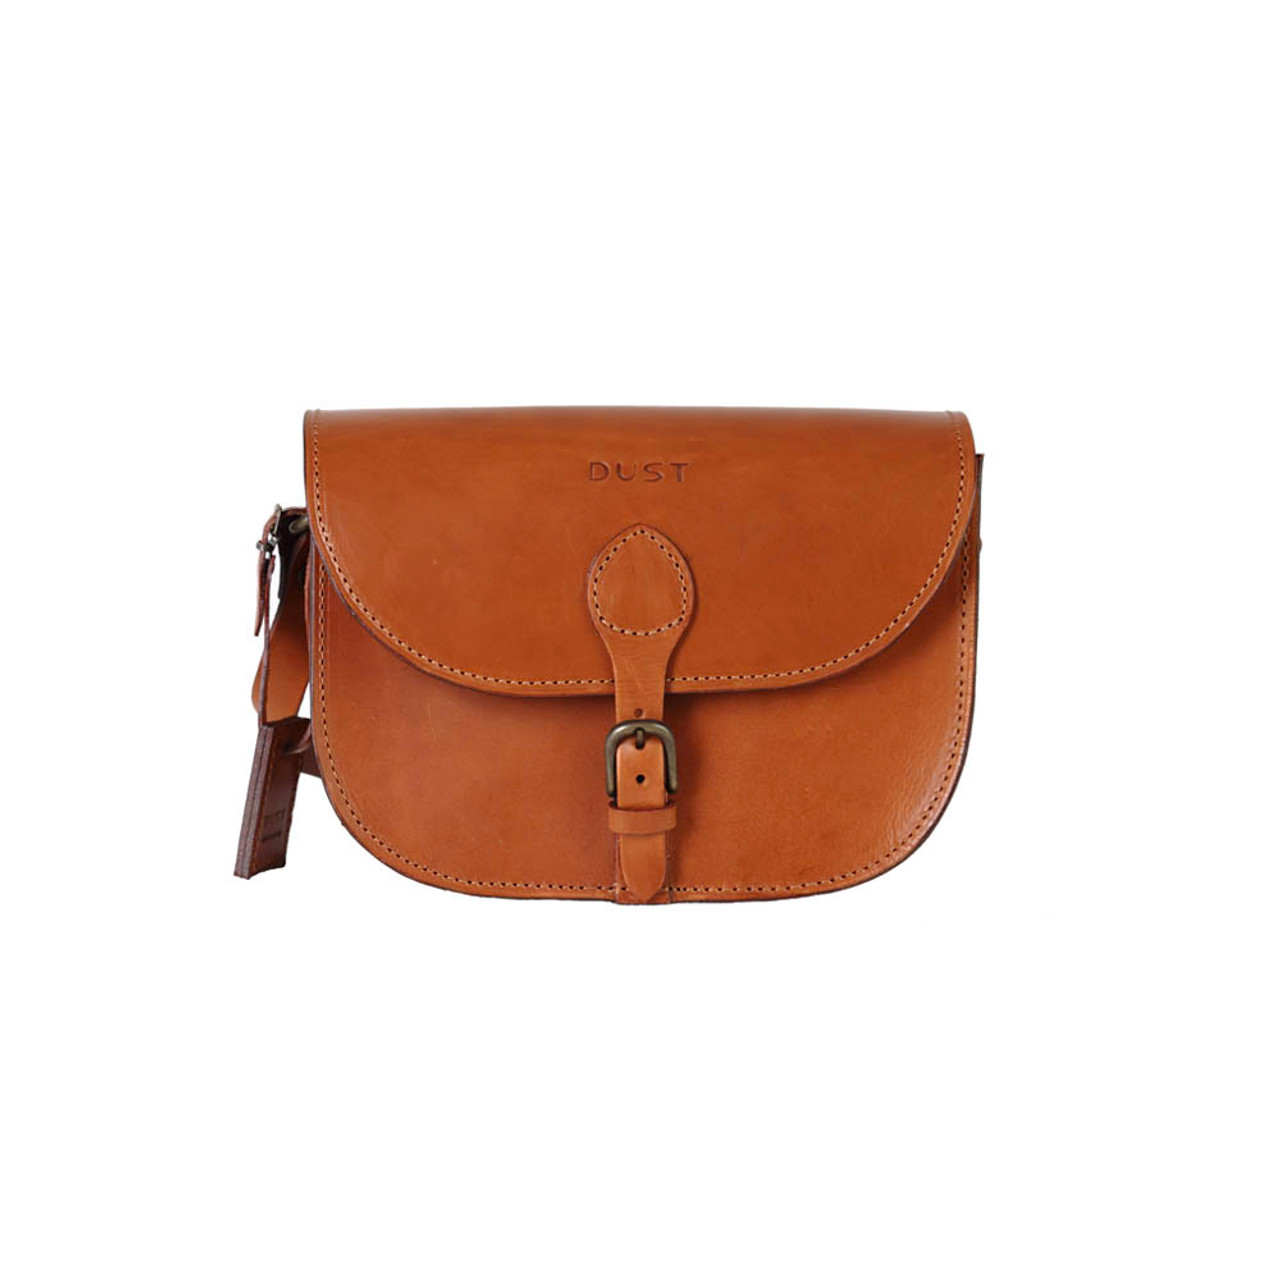 Ashwood leather body bag in tan soft luxurious leather. - Gabucci